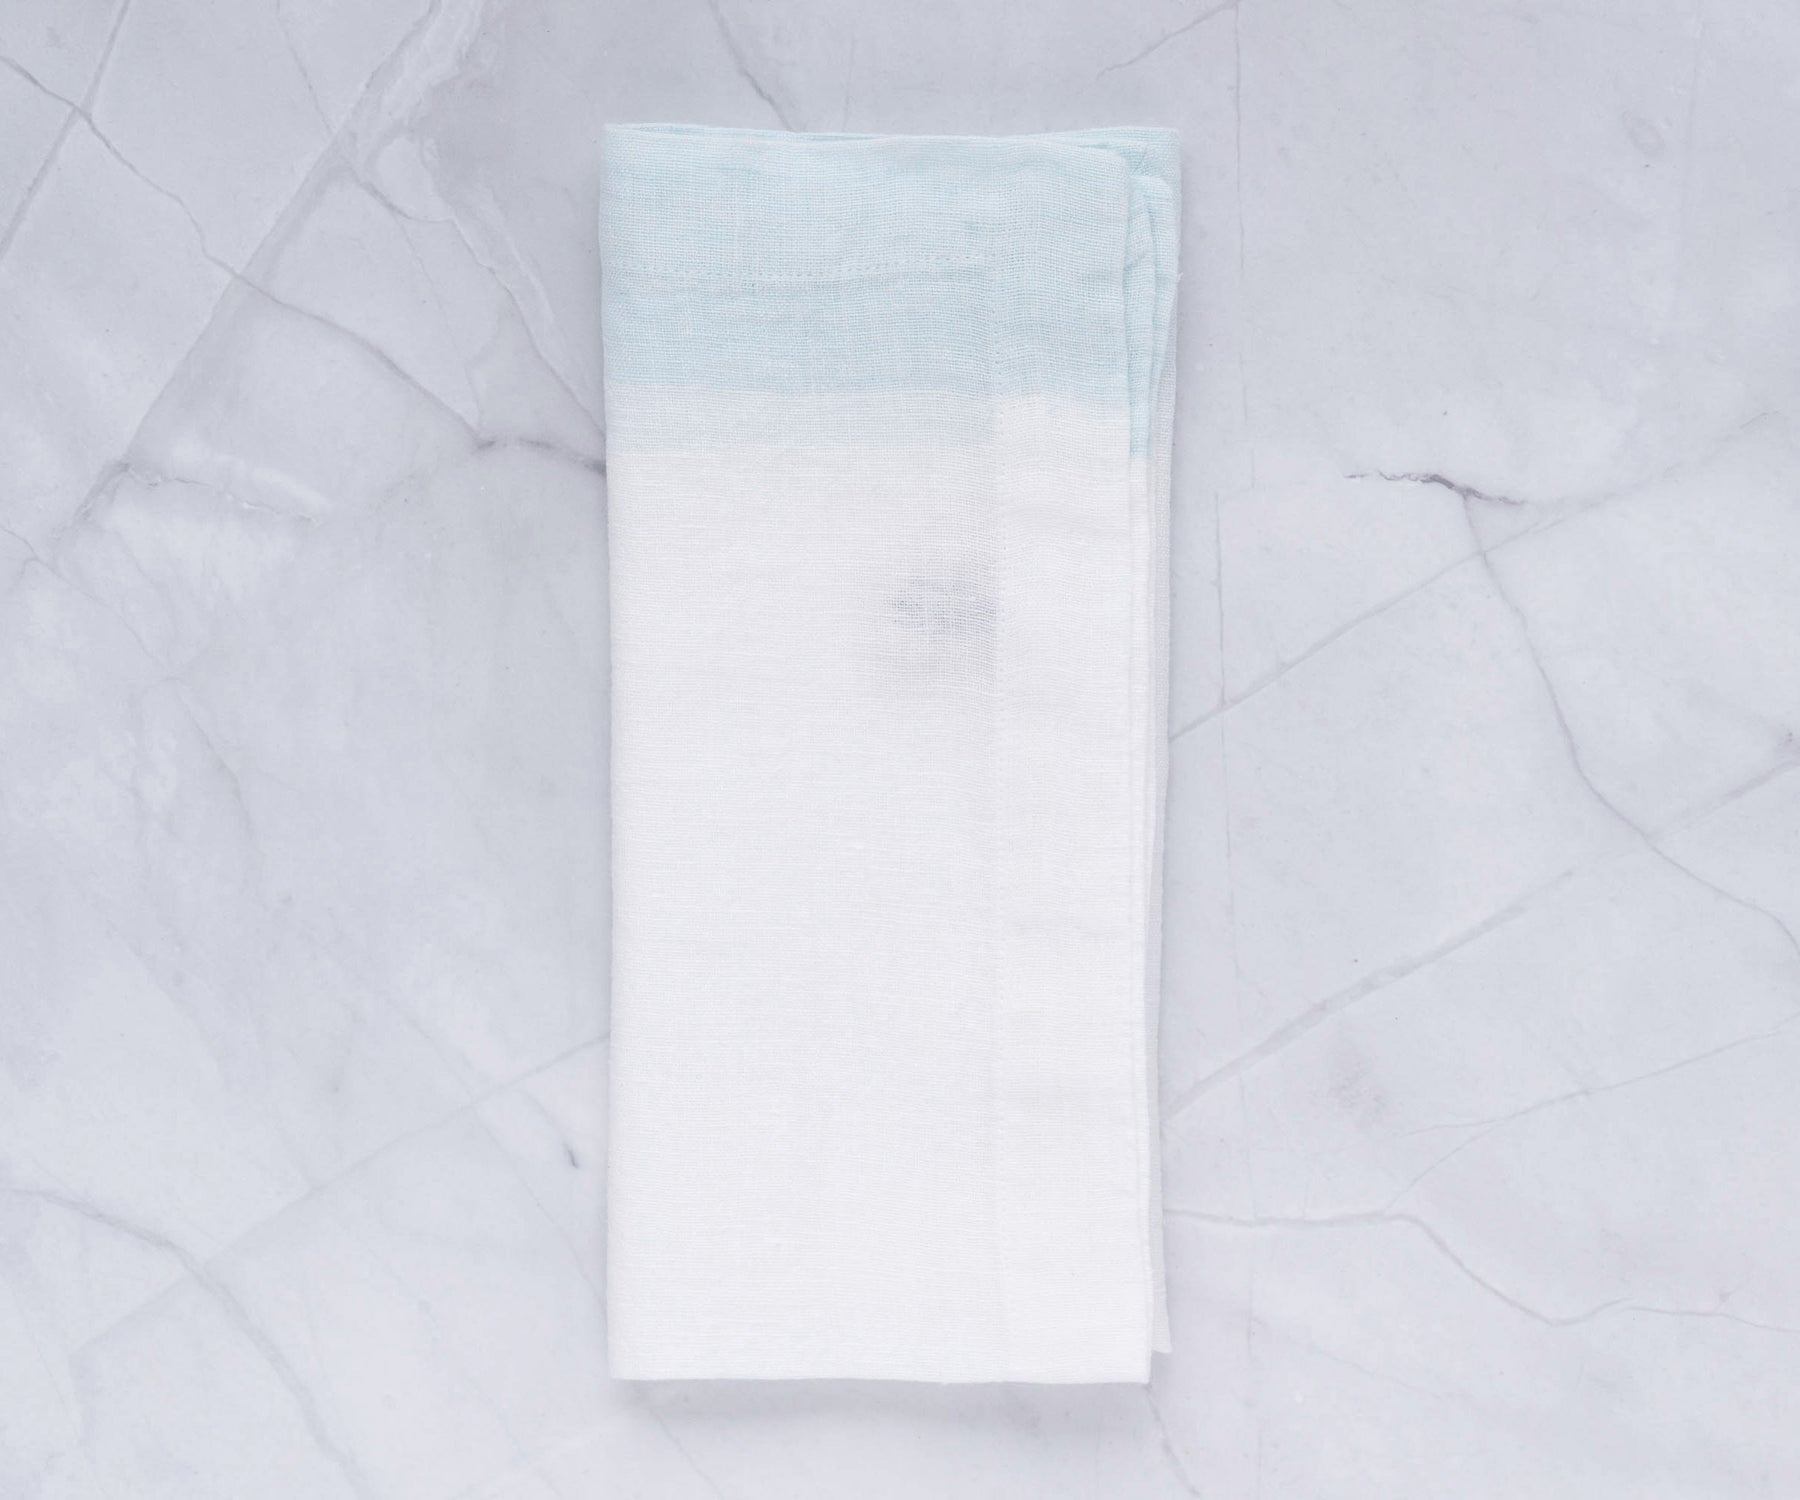 Wedding napkin folds demonstrated on a pristine white napkin